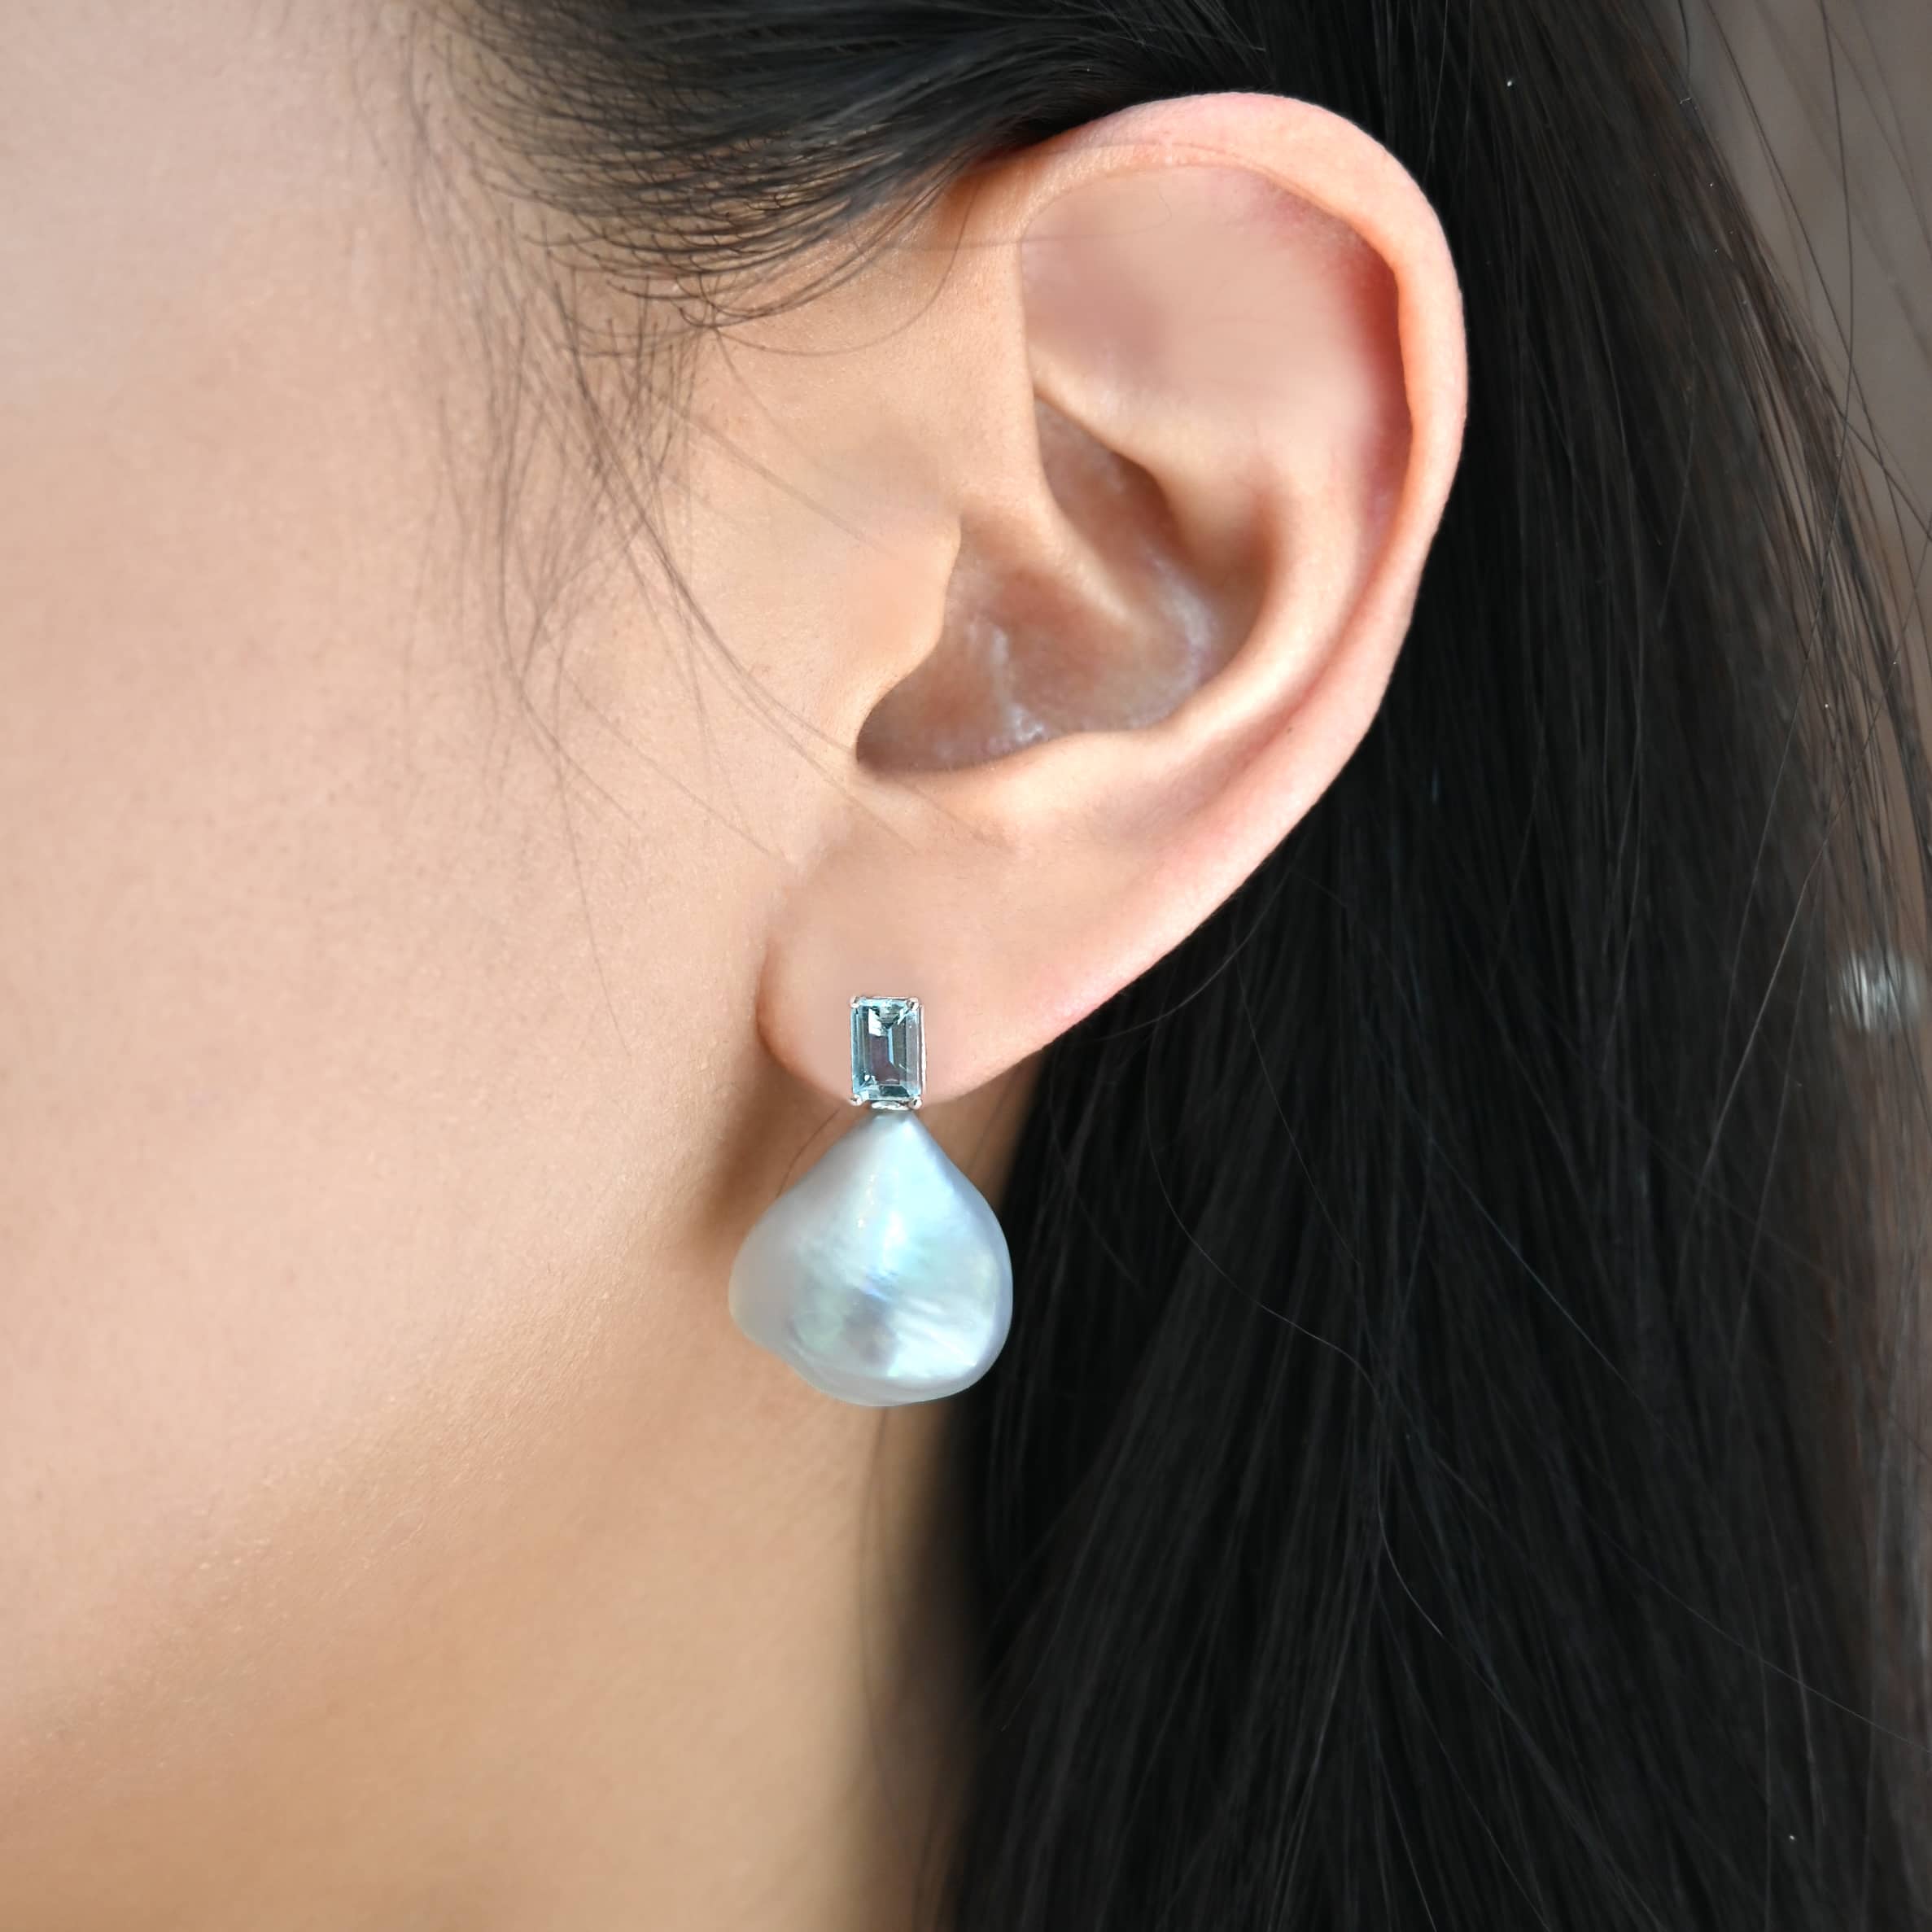 海韻巴洛克珍珠耳環 Valuri Baroque Pearl Earrings